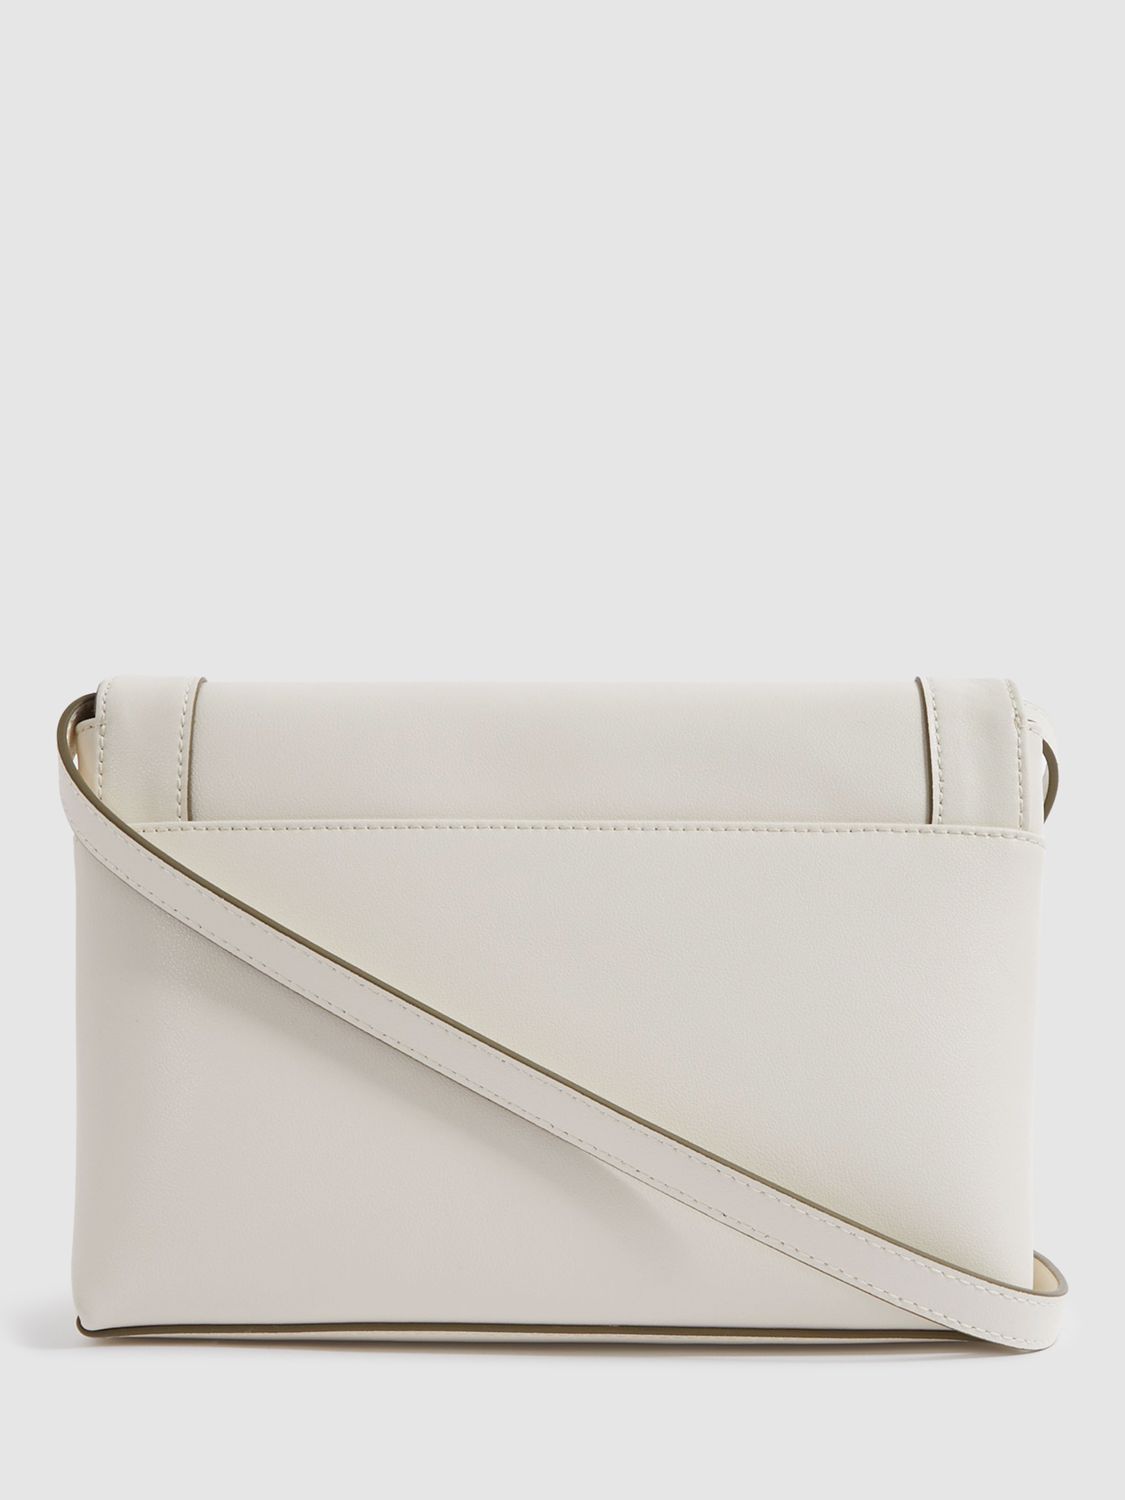 Reiss Kora Soft Leather Cross Body Bag, Off White, One Size